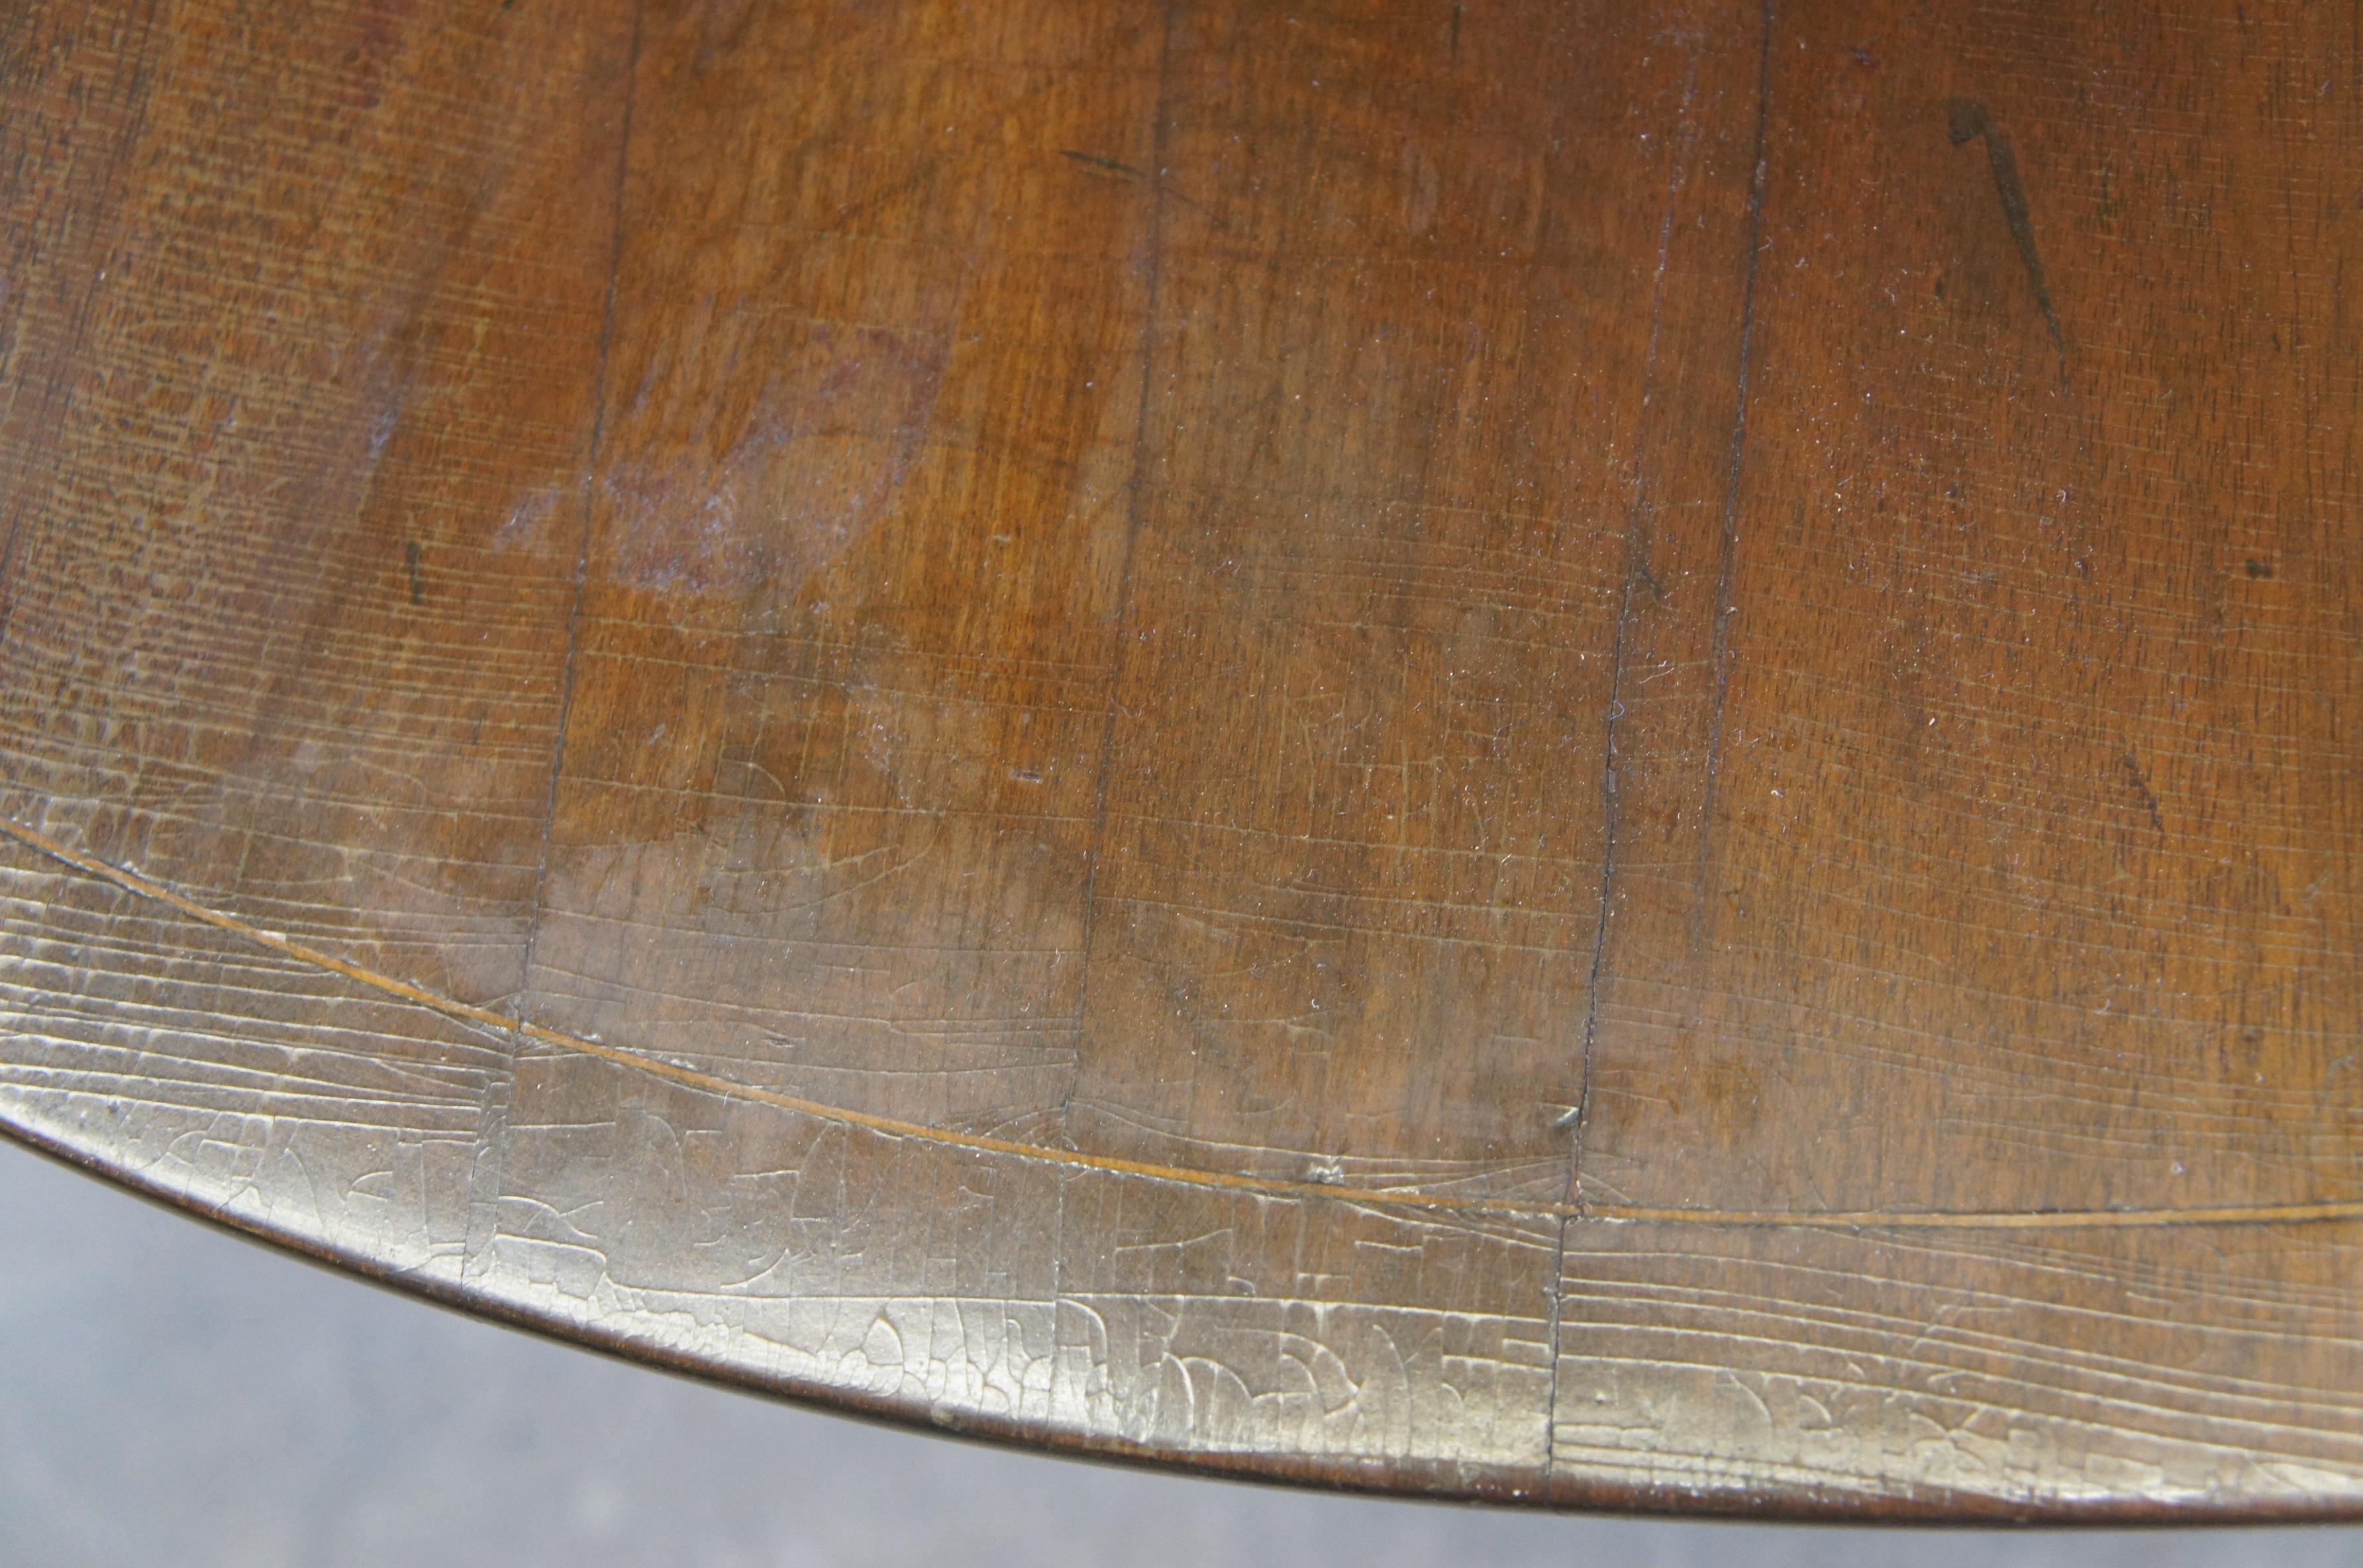 Antique German Biedermeier Mahogany Inlaid Round Center Pedestal Table 36